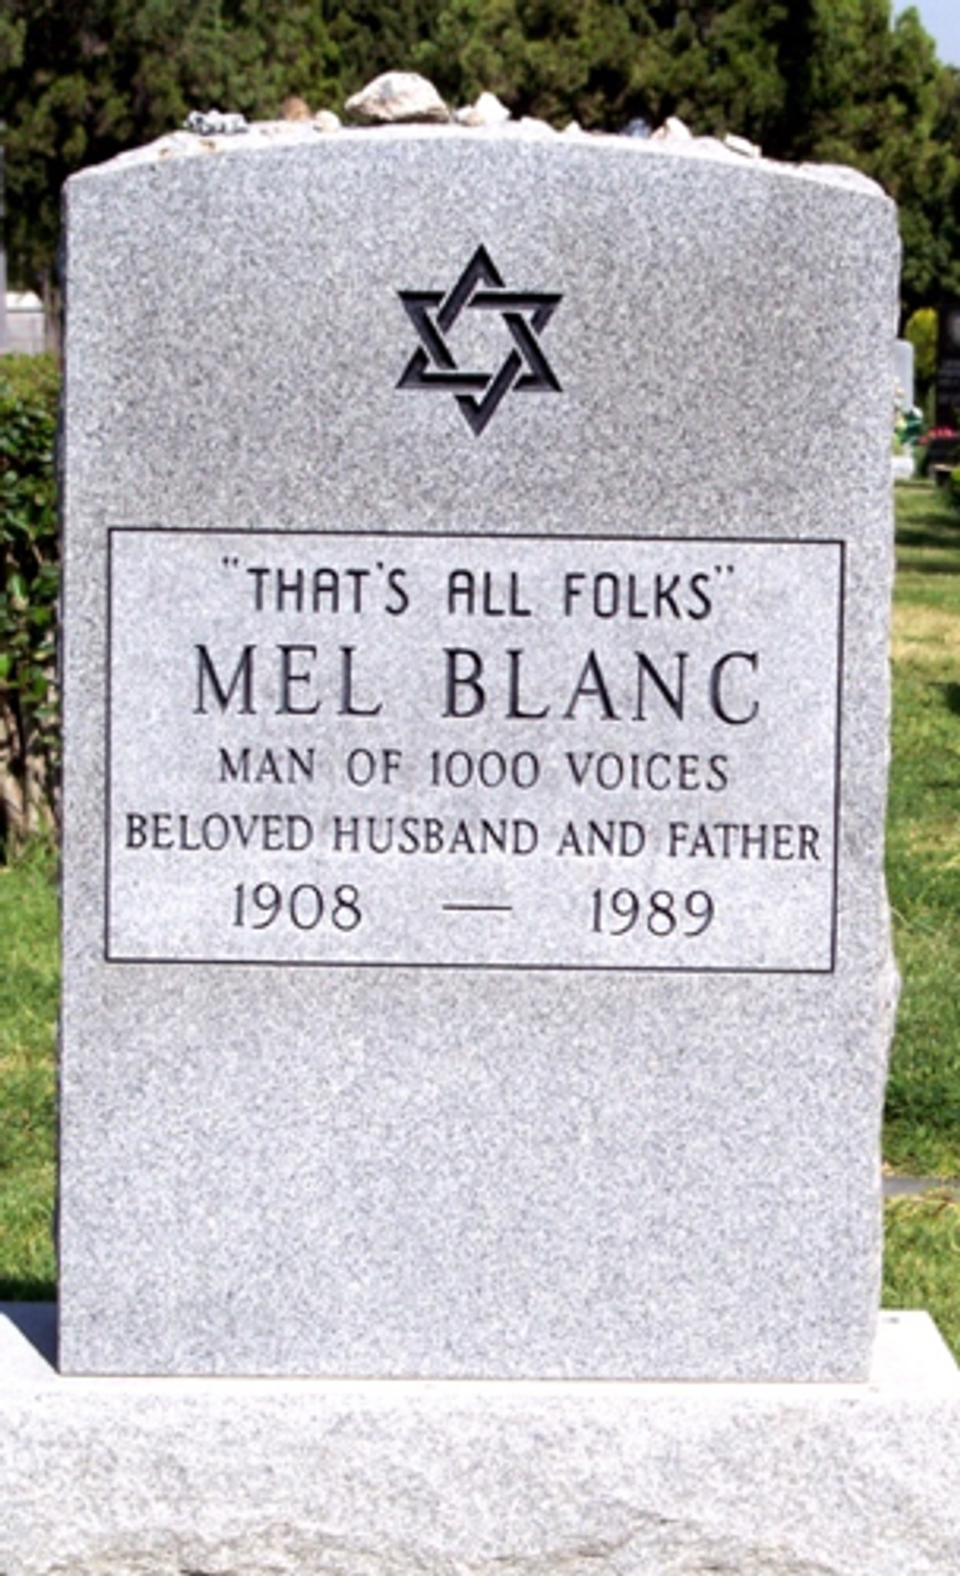 Mel Blanc’s tombstone